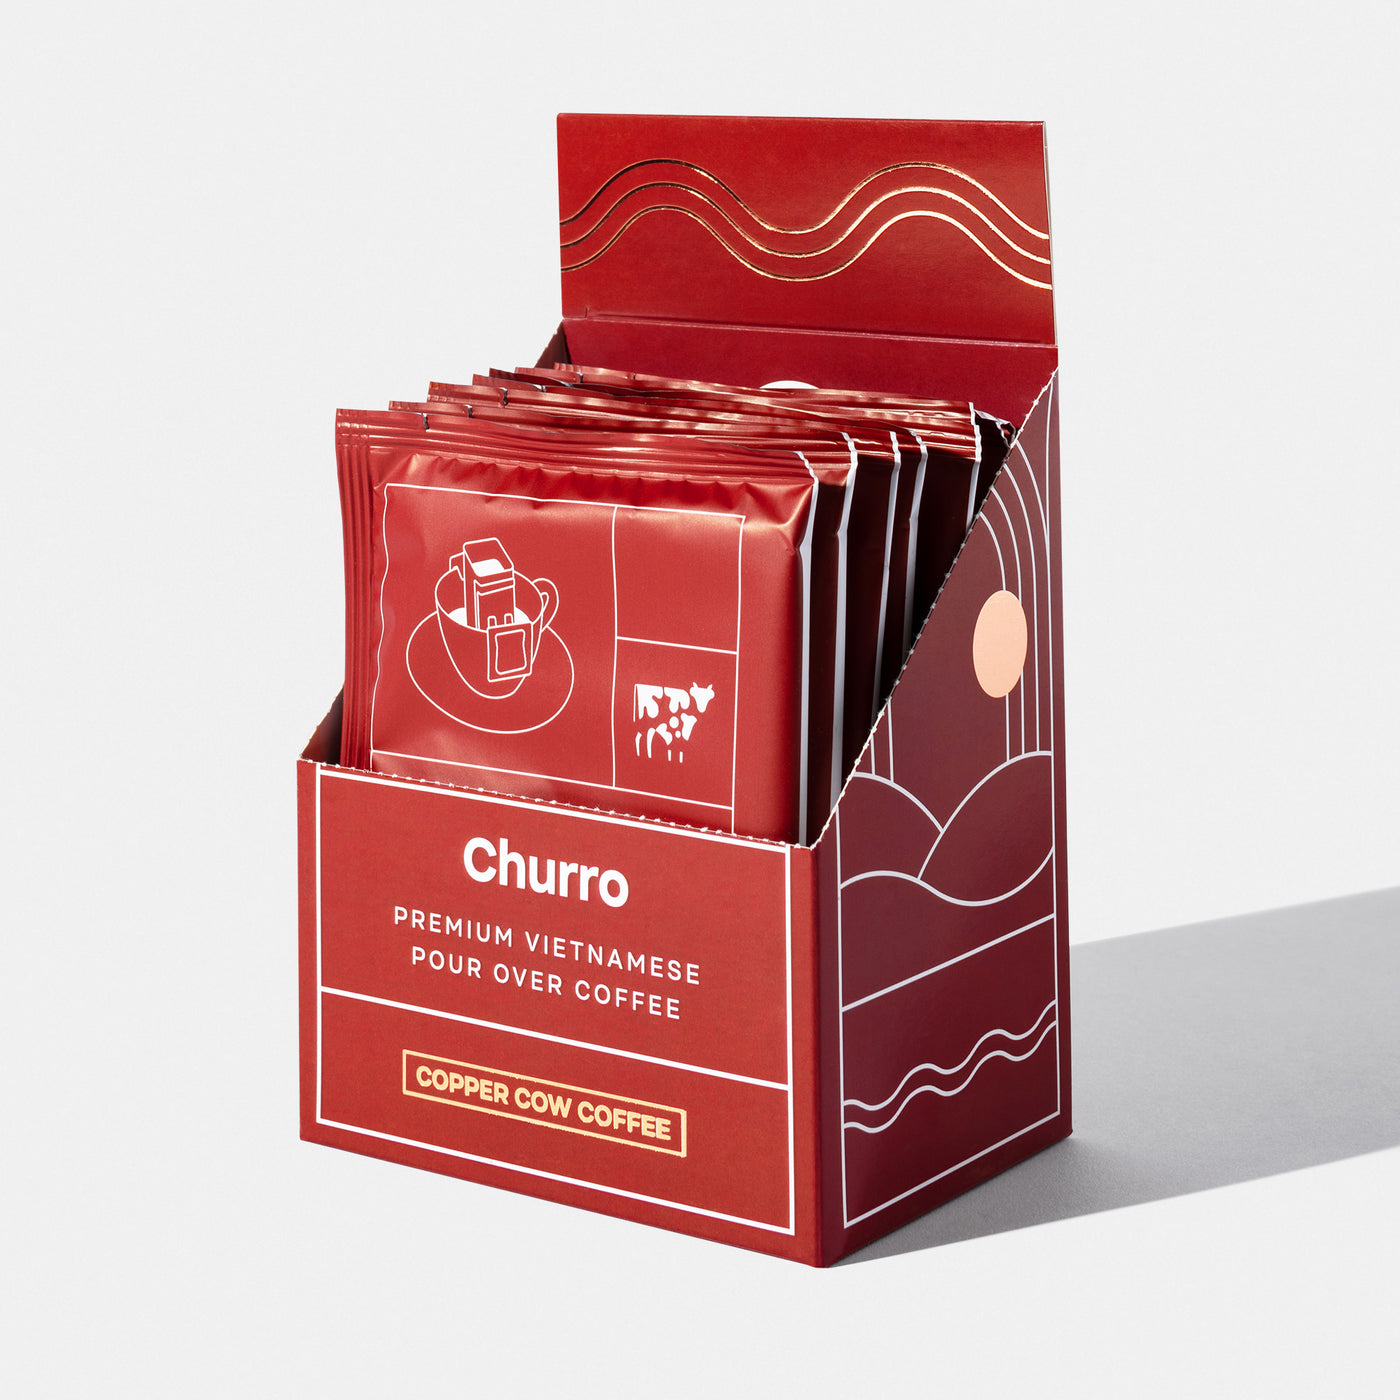 Churro Pour Over Coffee